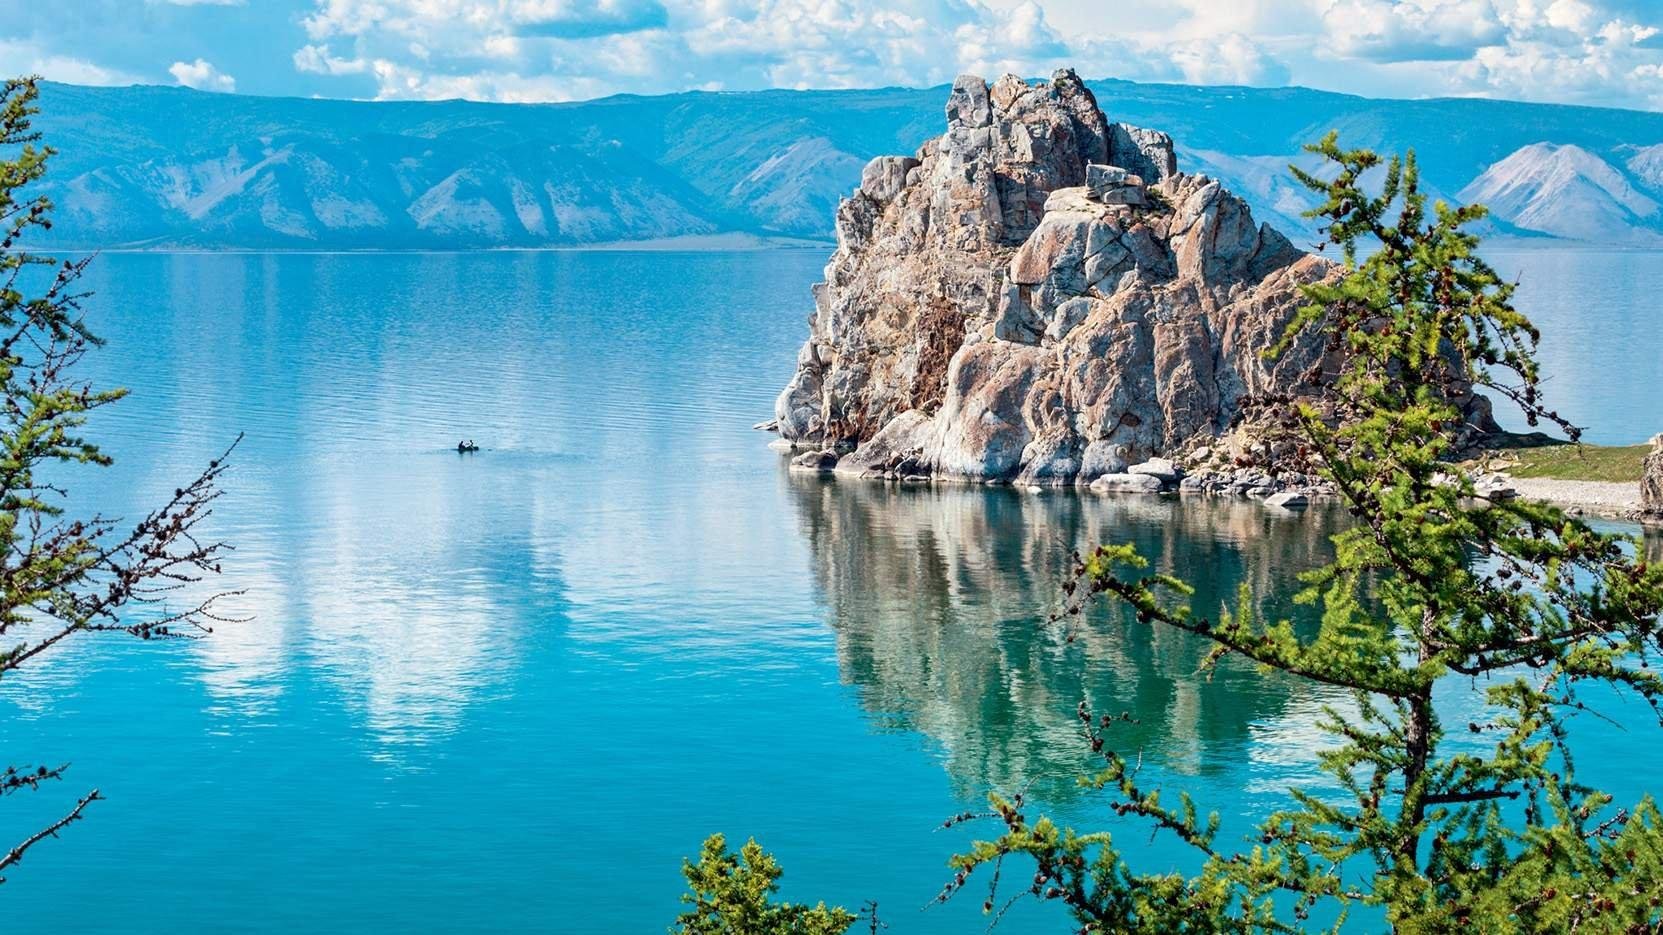 картинки озер россии с названиями